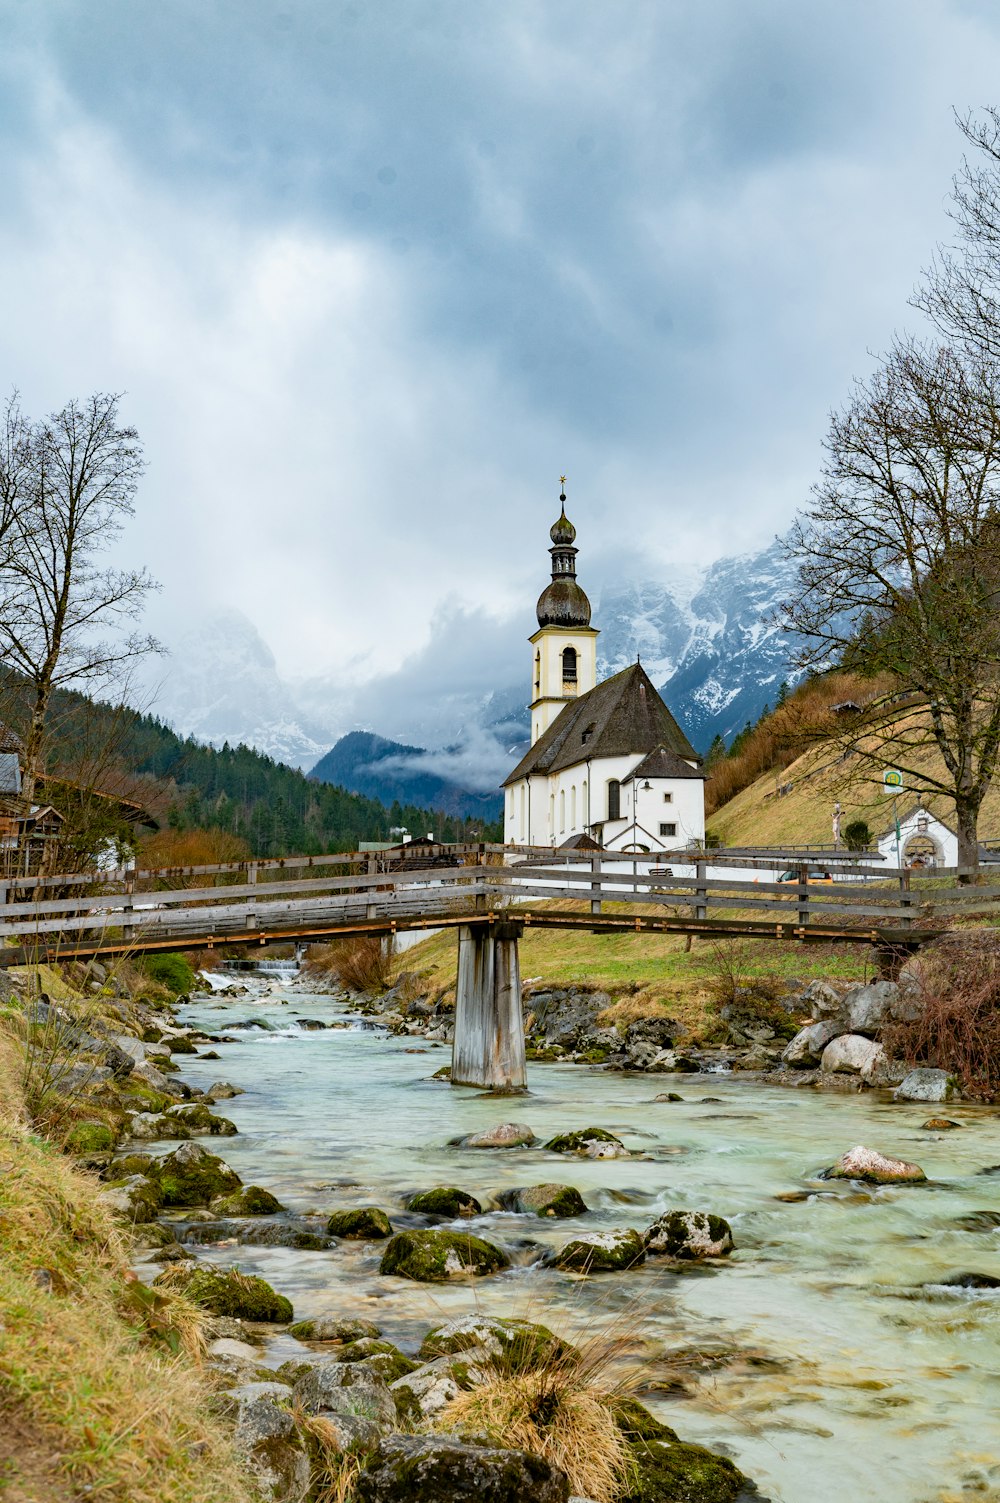 a small church on a bridge over a stream